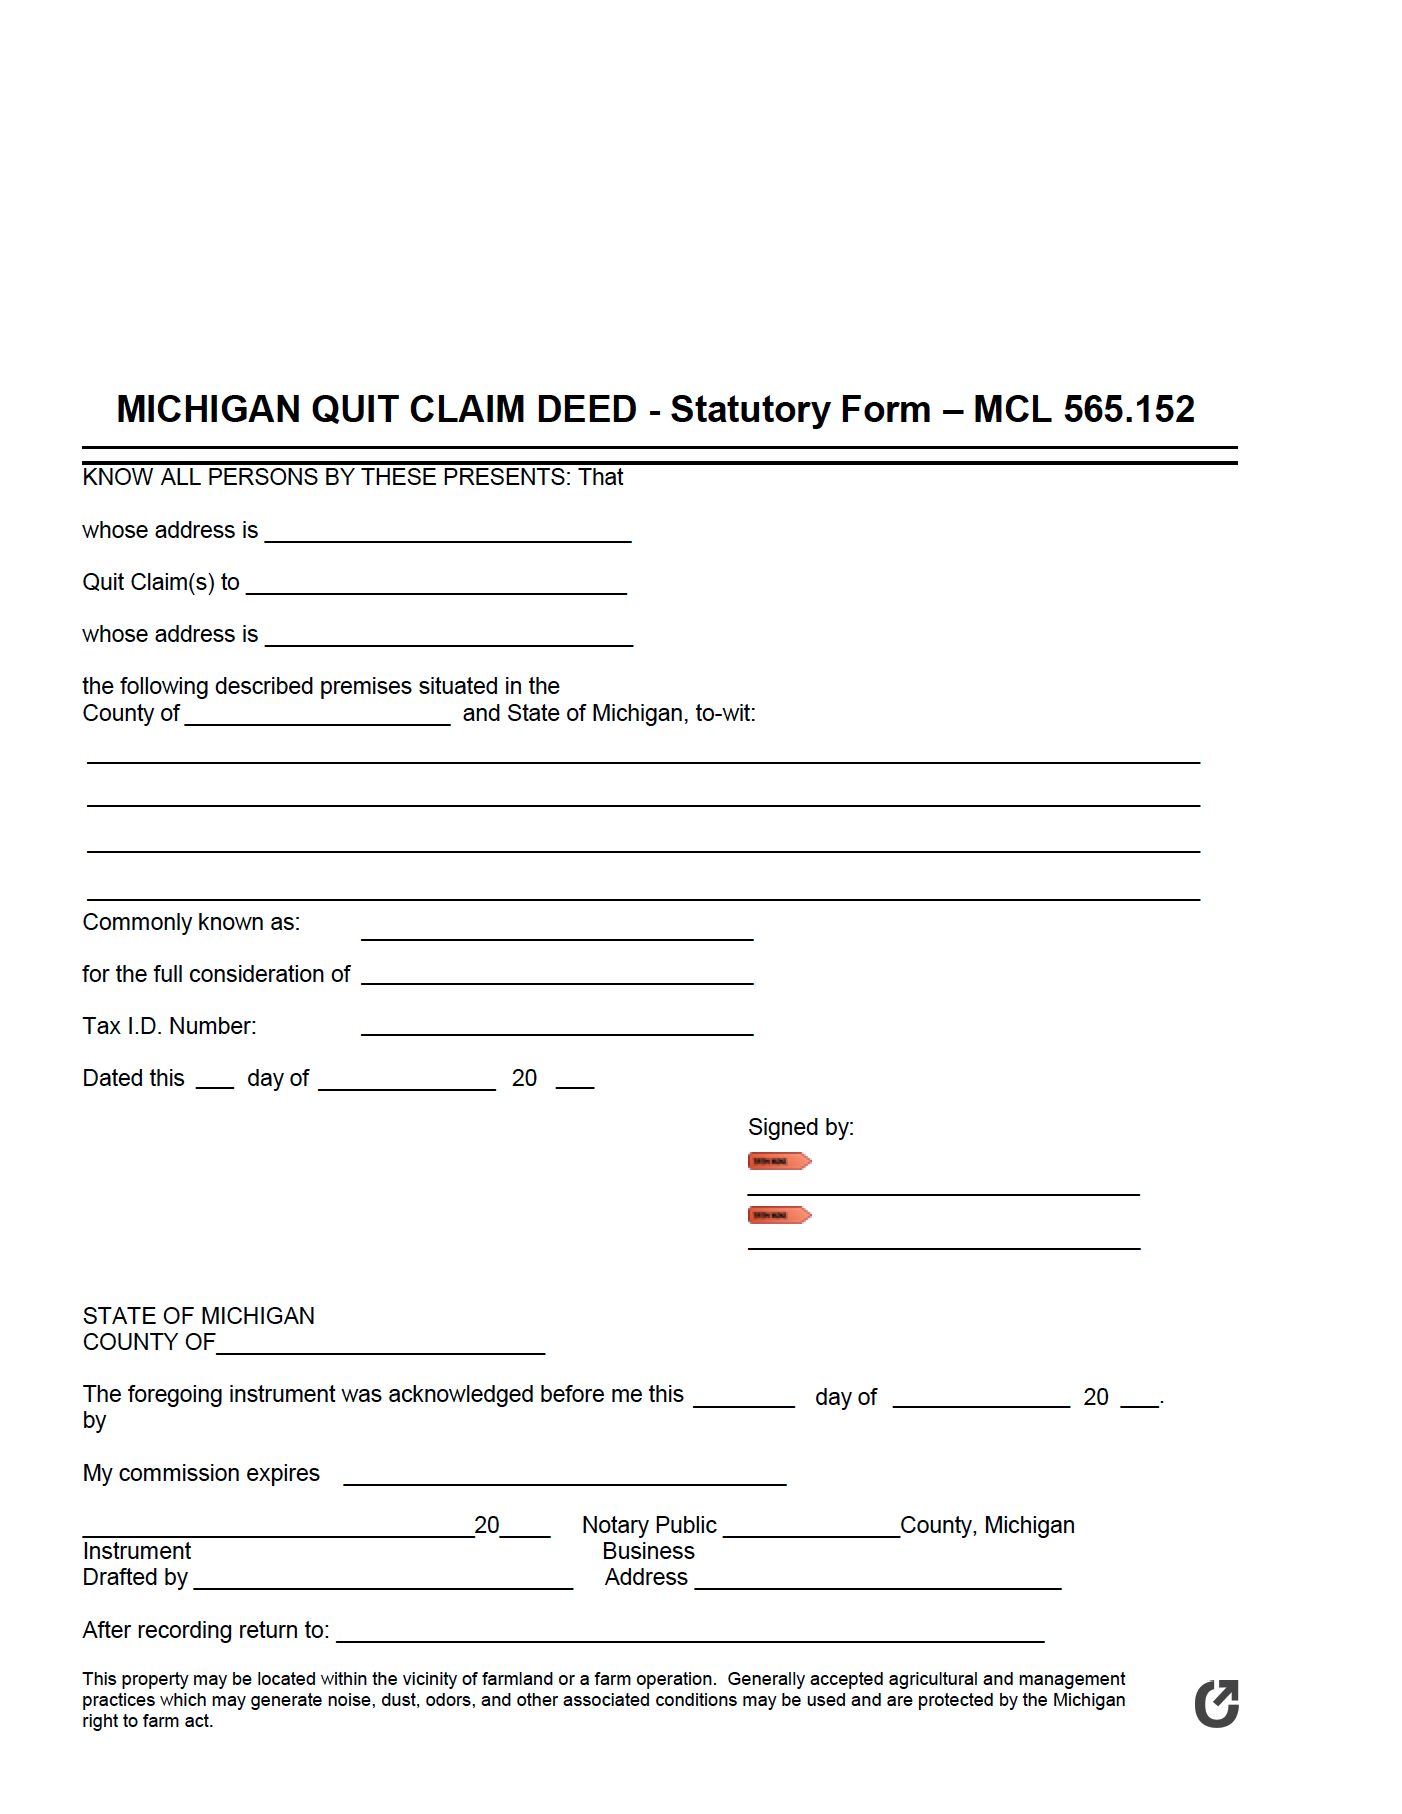 free-michigan-quit-claim-deed-form-pdf